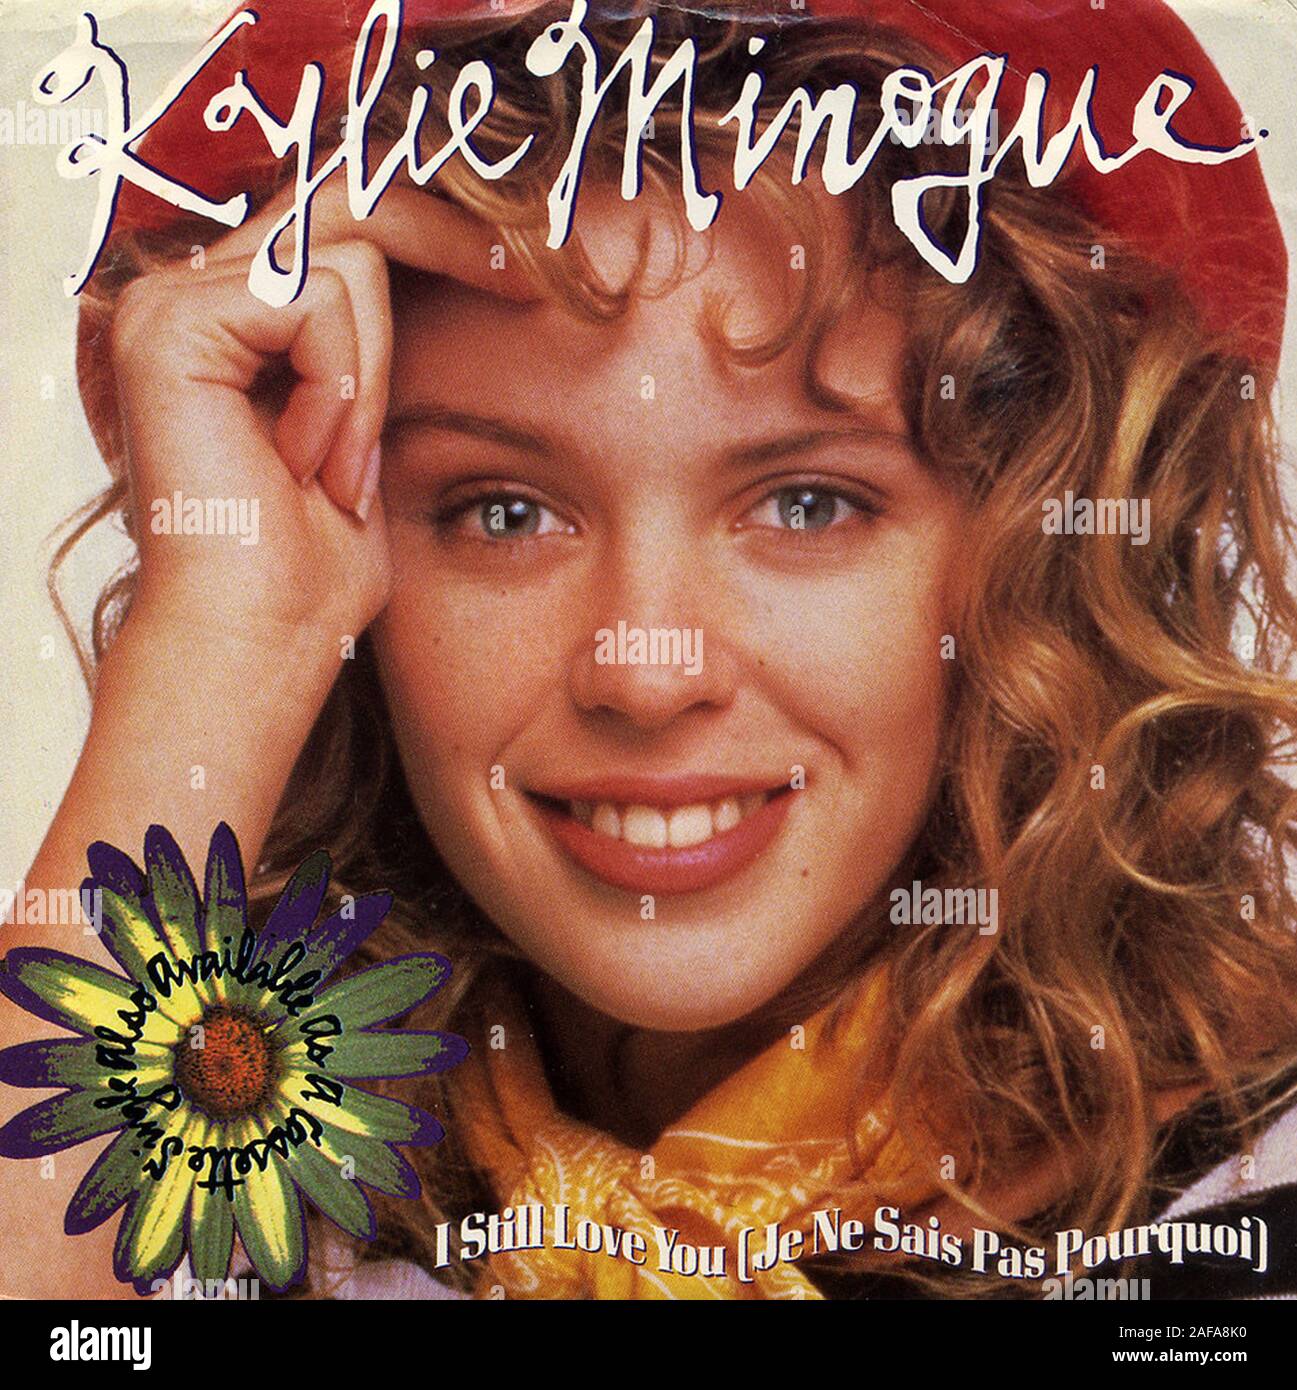 Kylie Minogue - Te sigo queriendo (Je ne sais pas Pourquoi) - portada del  álbum de vinilo Vintage Fotografía de stock - Alamy